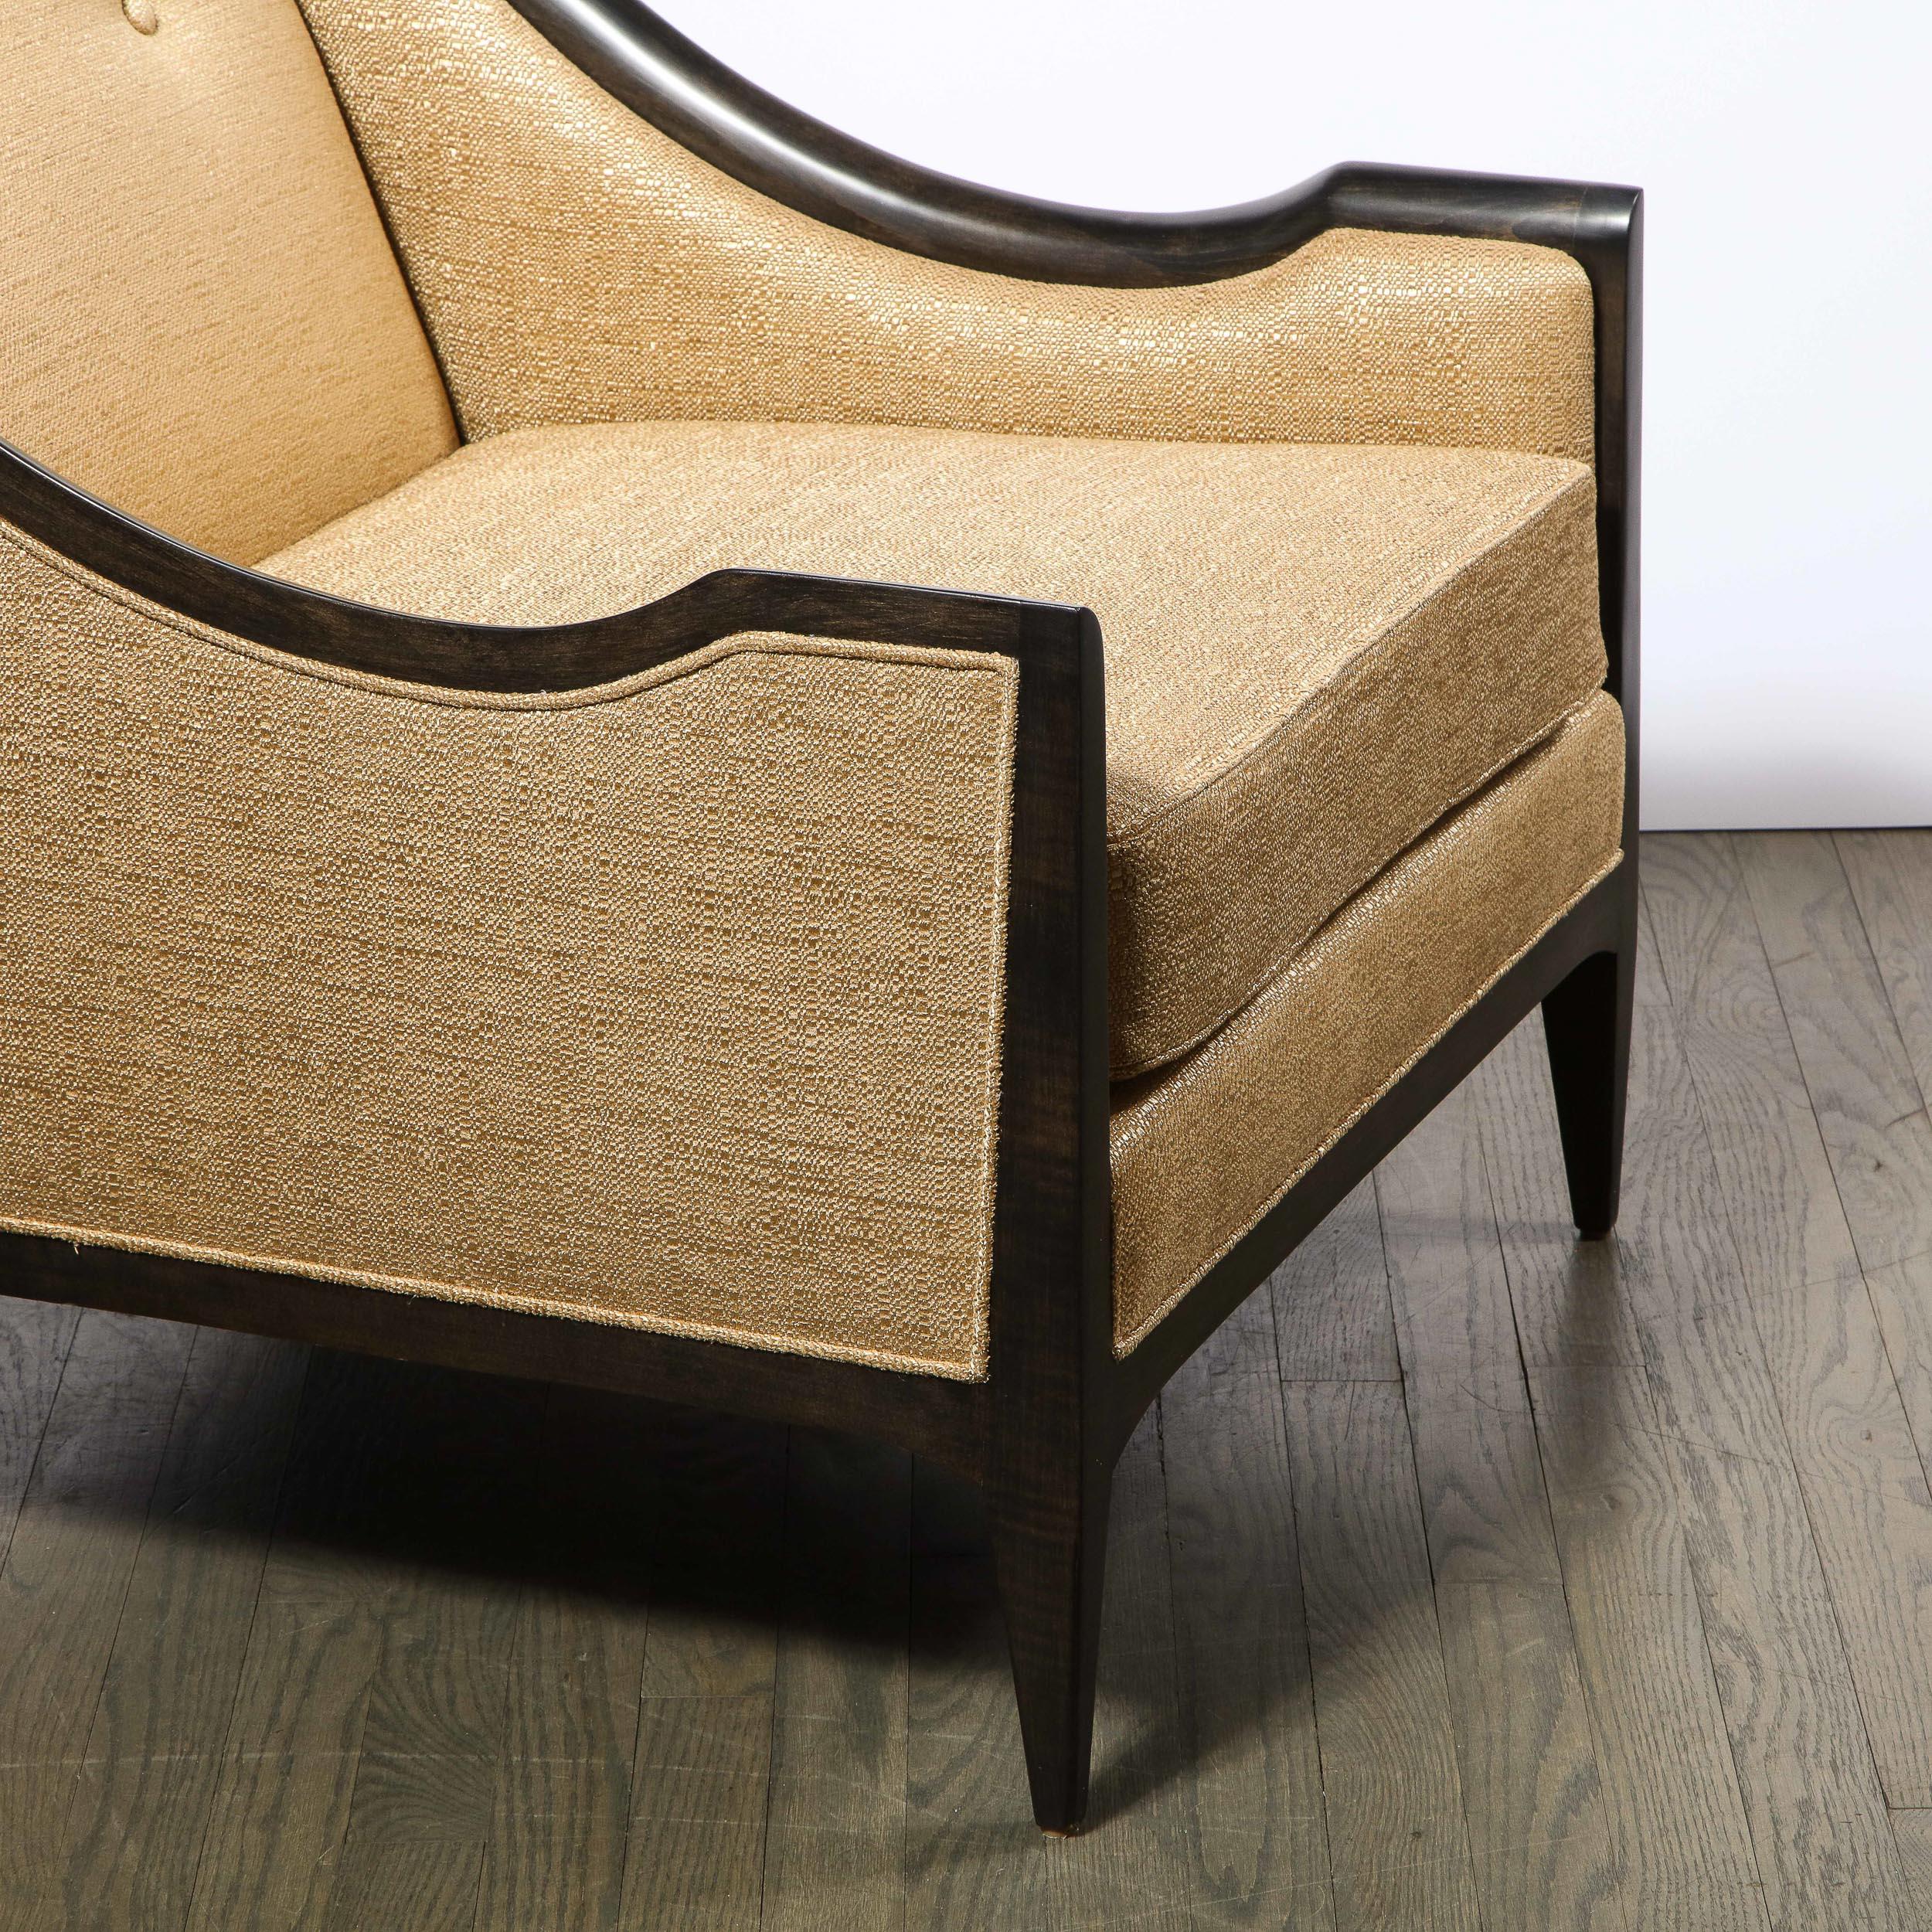 Pair of Mid-Century Modern Ebonized Walnut Club Chairs in Gold Holly Hunt Fabric 1